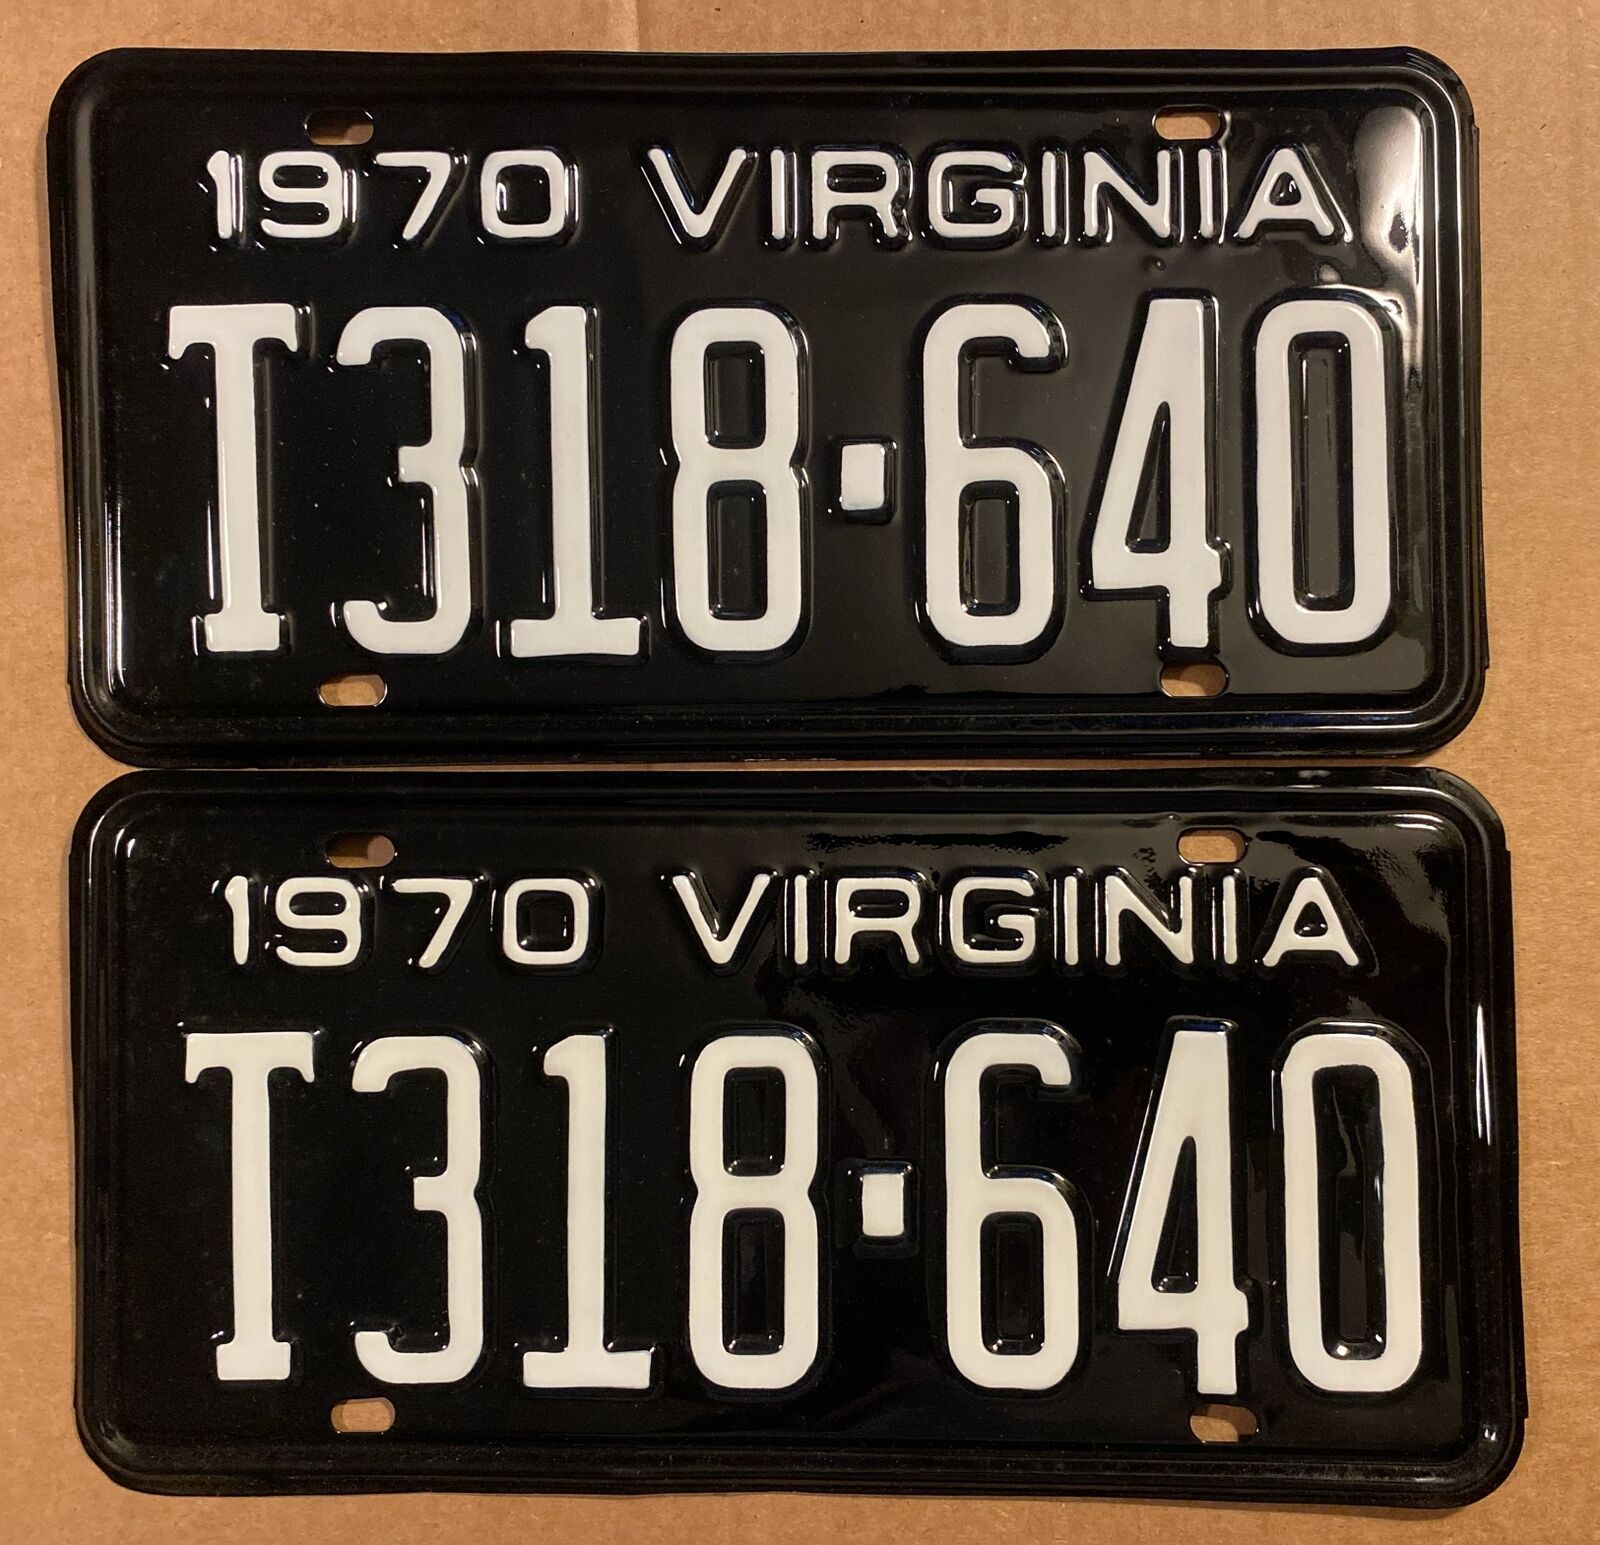 1970 Virginia license plates - beautifully restored truck pair